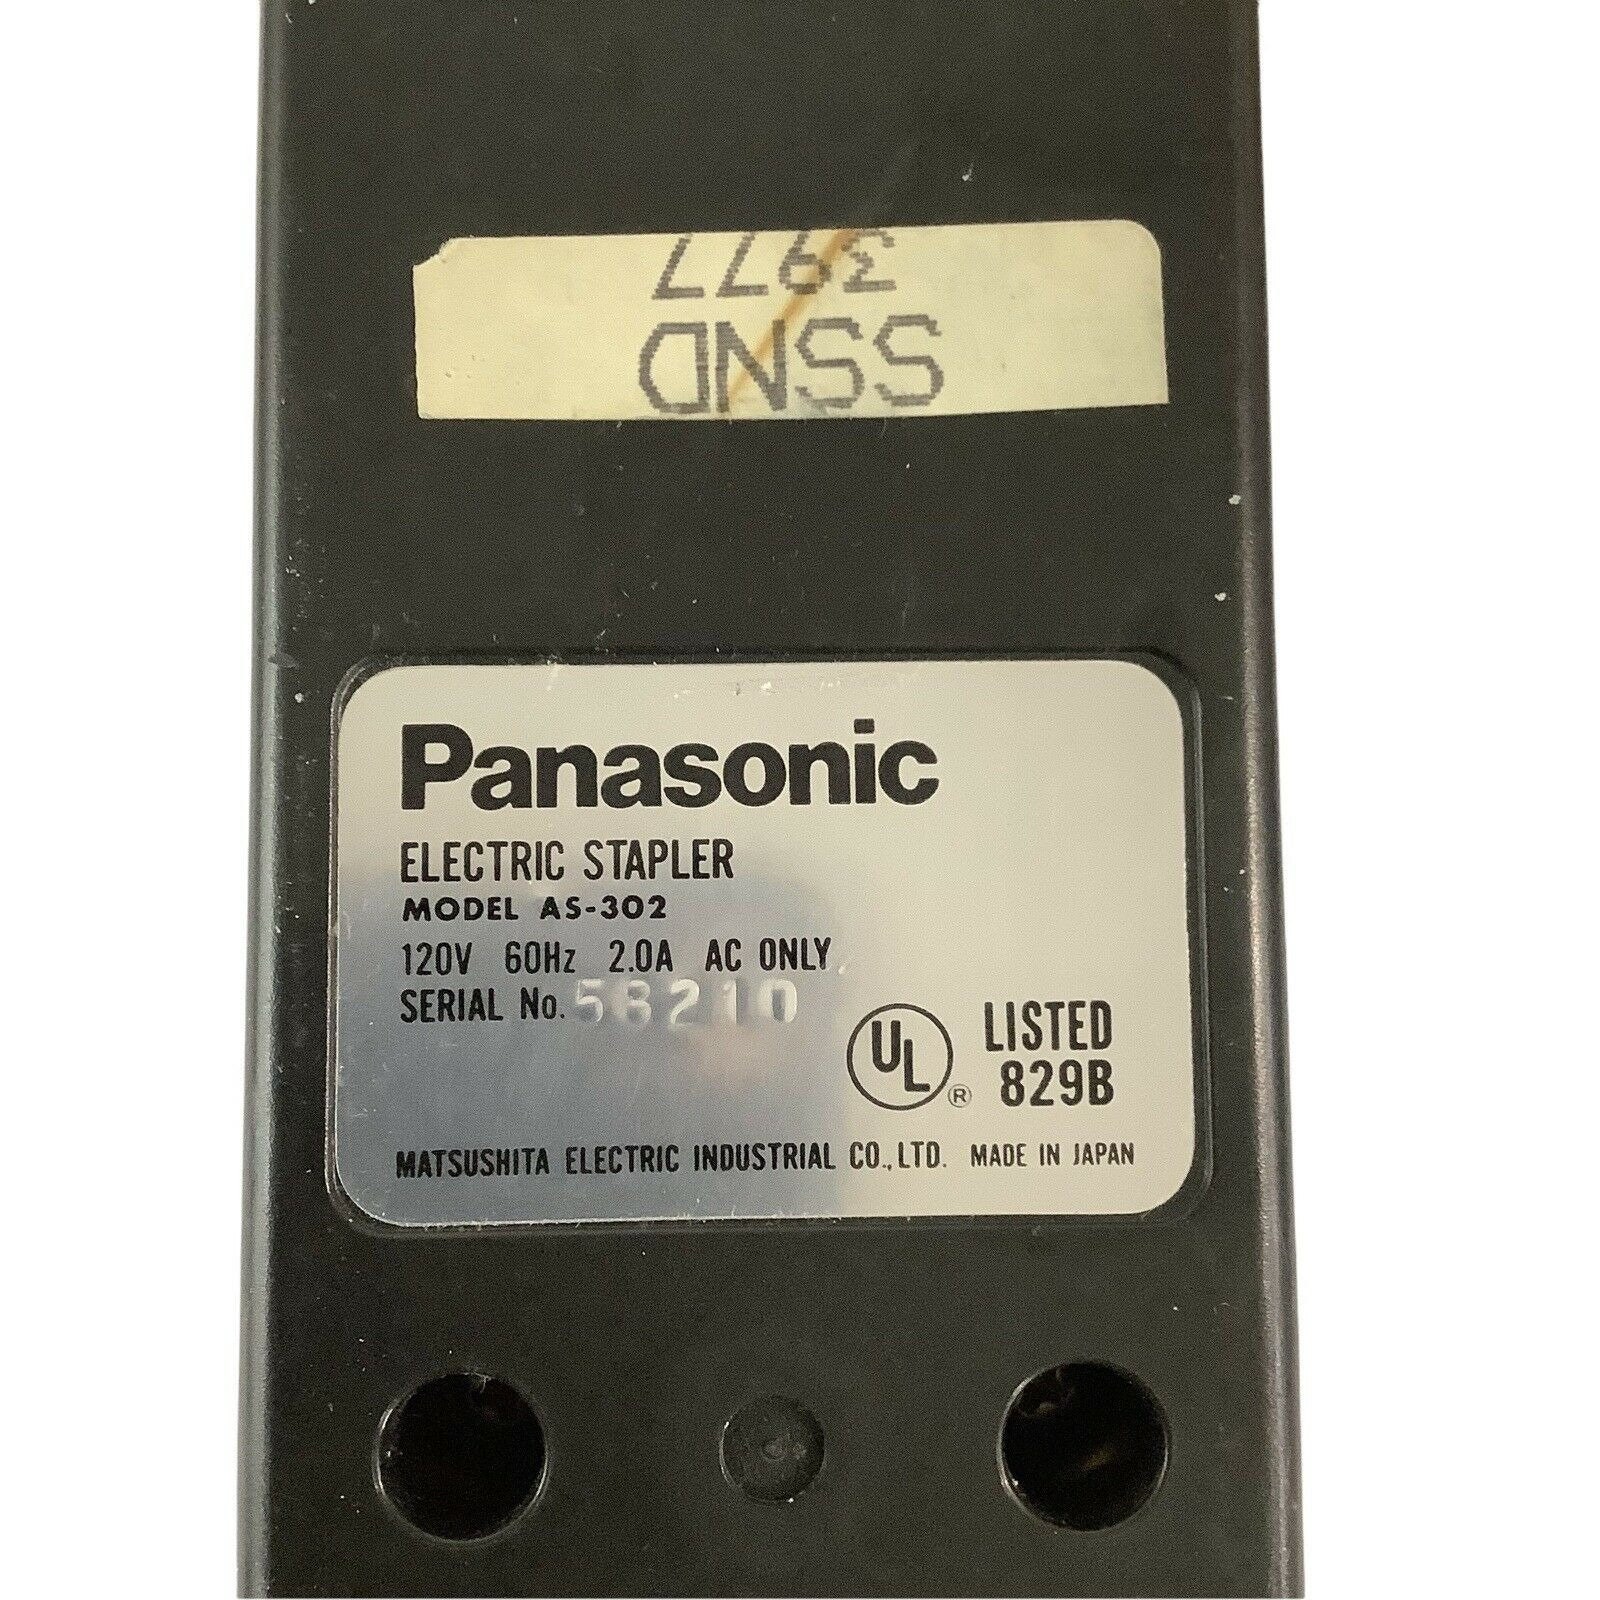 Panasonic As-302 Heavy Duty Desk Electric Stapler 120v AC Tested & Works for sale online 